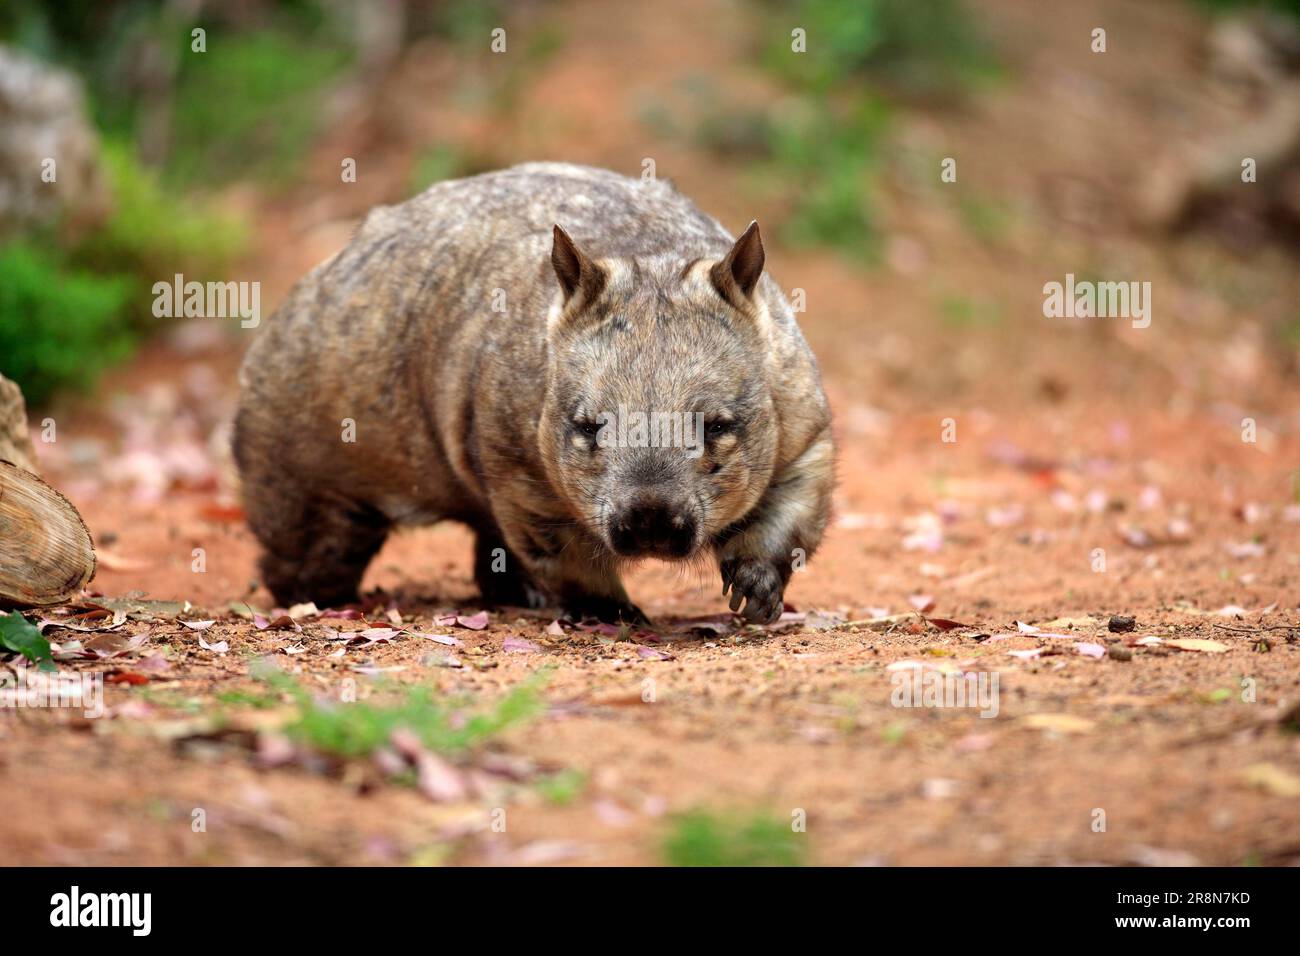 Southern hairy-nosed wombat (Lasiorhinus latifrons), broad-fronted wombat, Australia Stock Photo